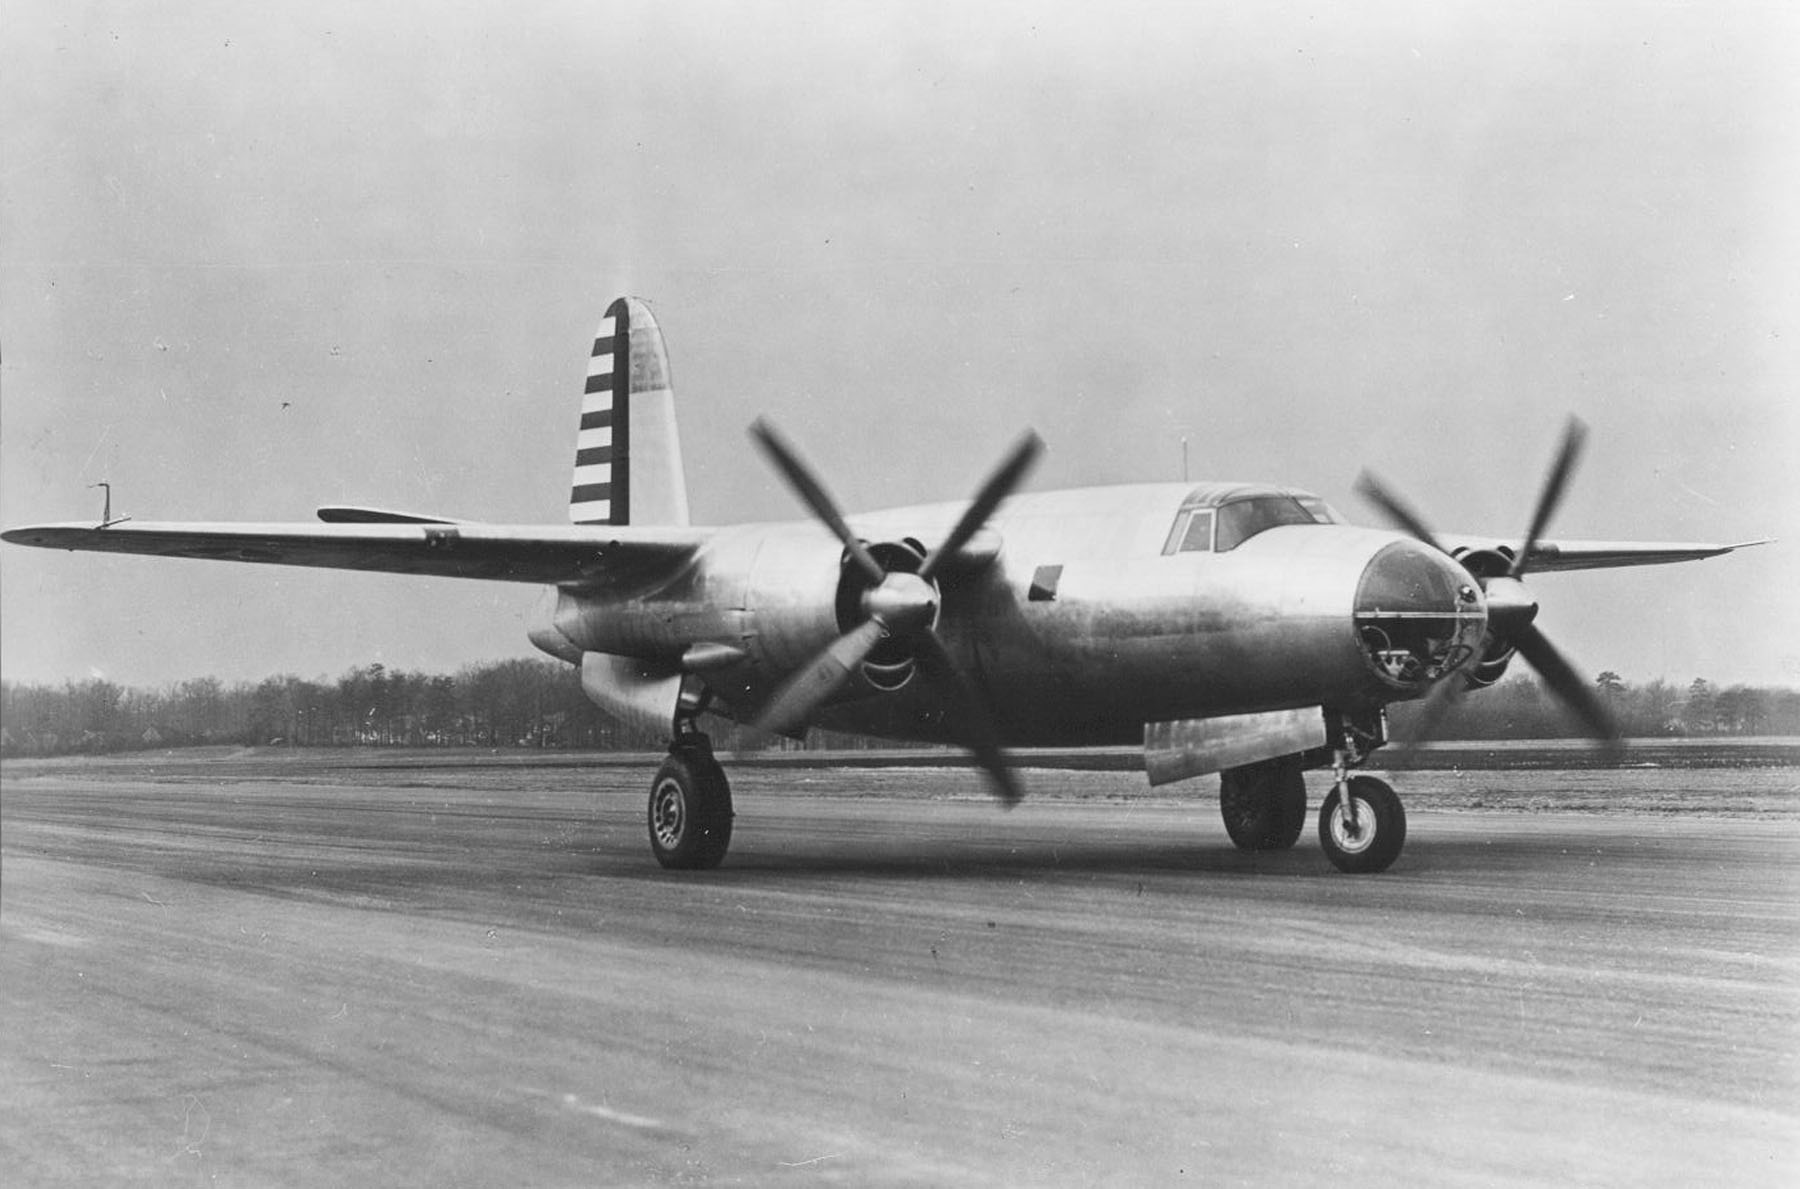 Prototype Martin B-26 40-1361 taxiing. (U.S. Air Force)